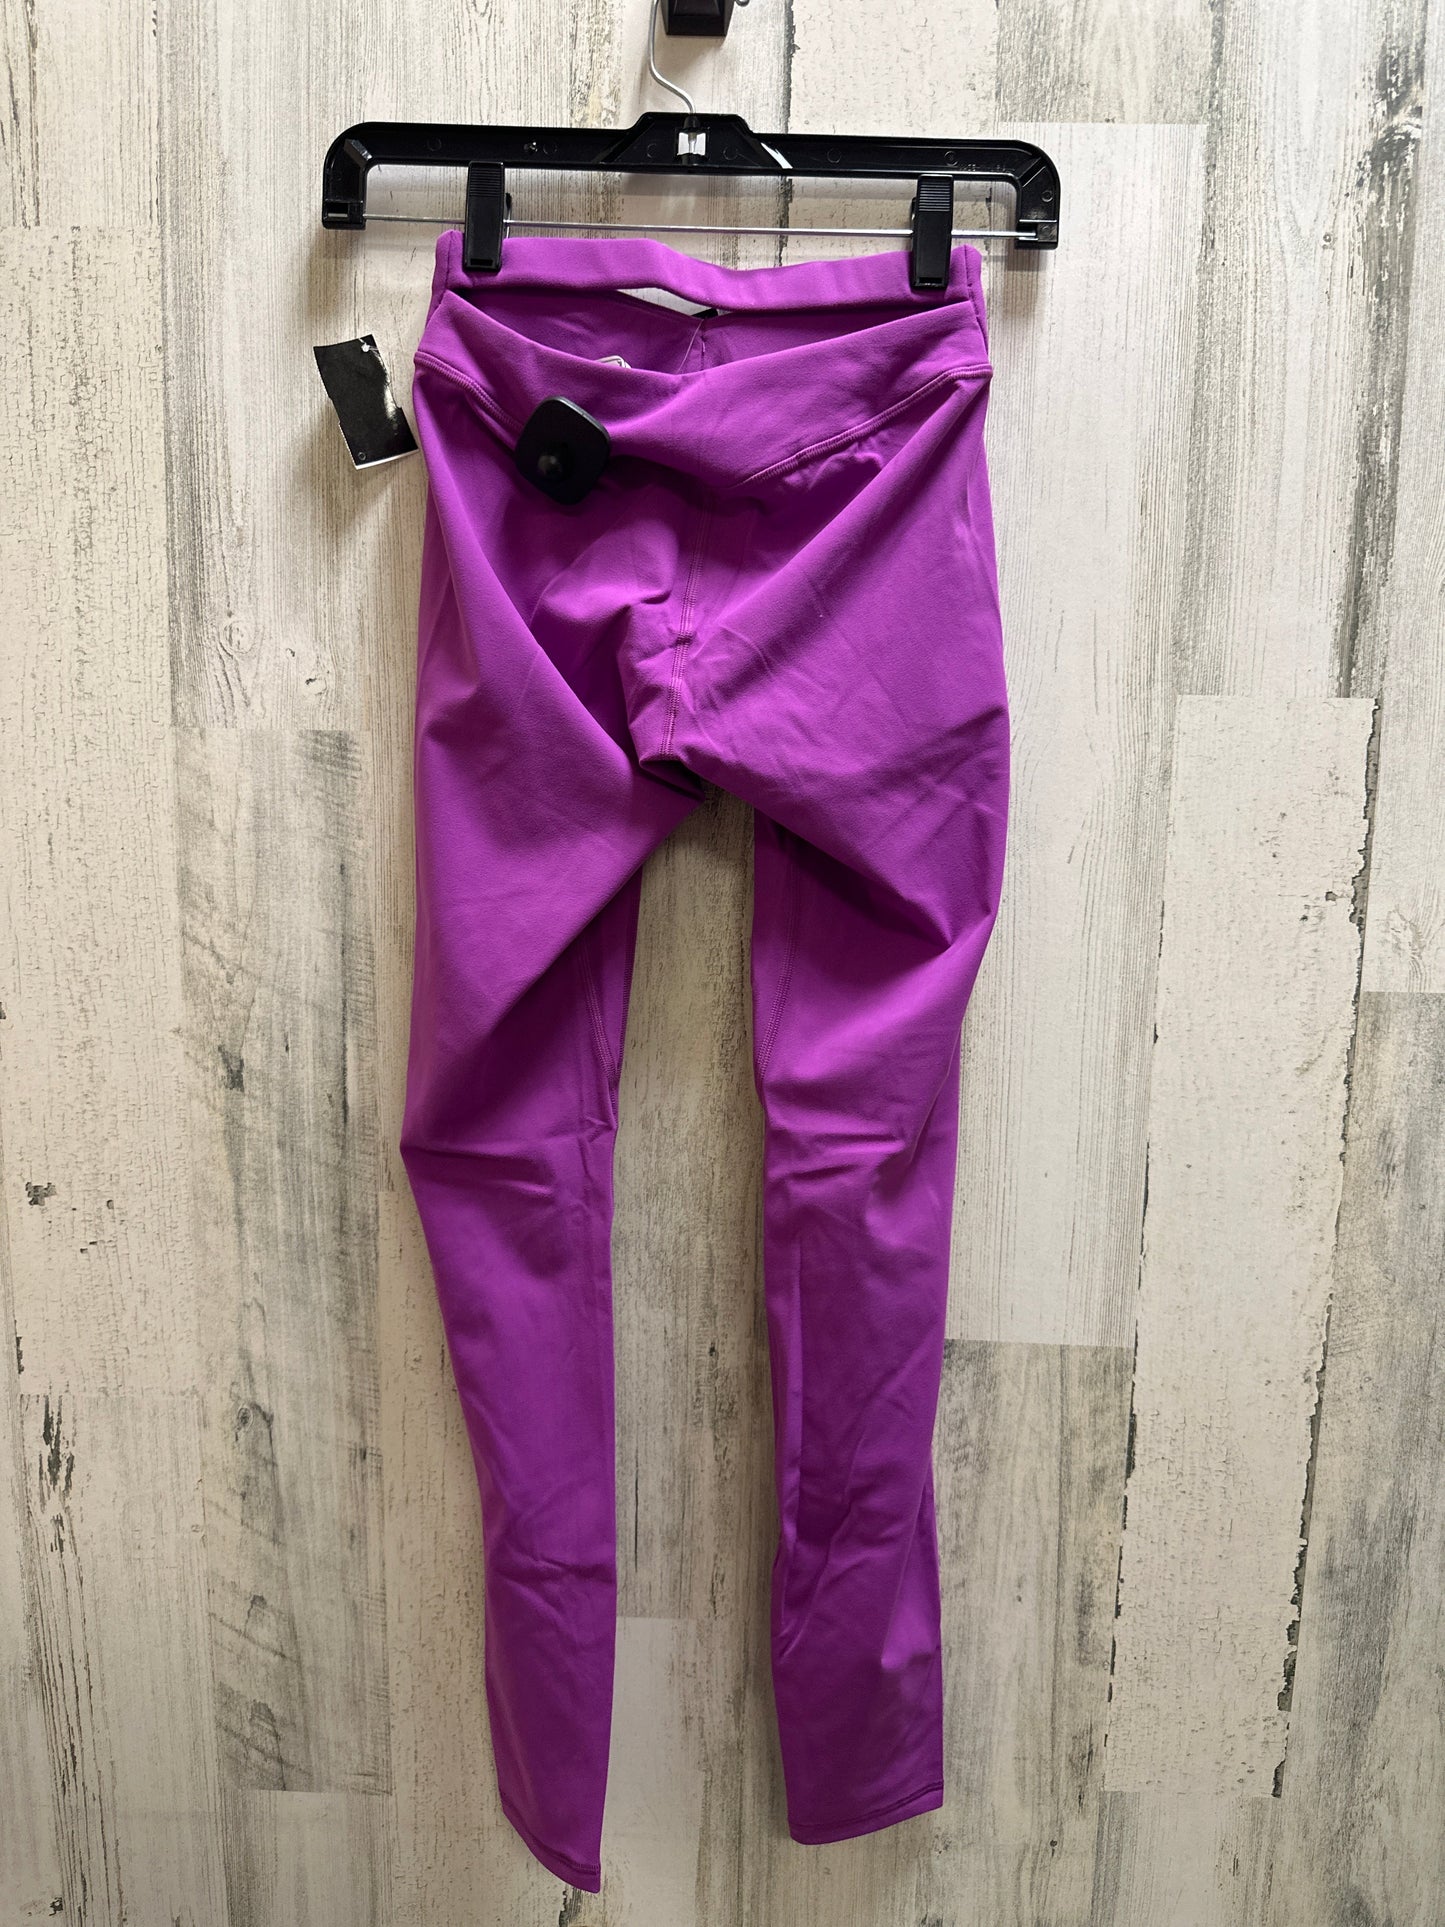 Purple Athletic Leggings Clothes Mentor, Size S